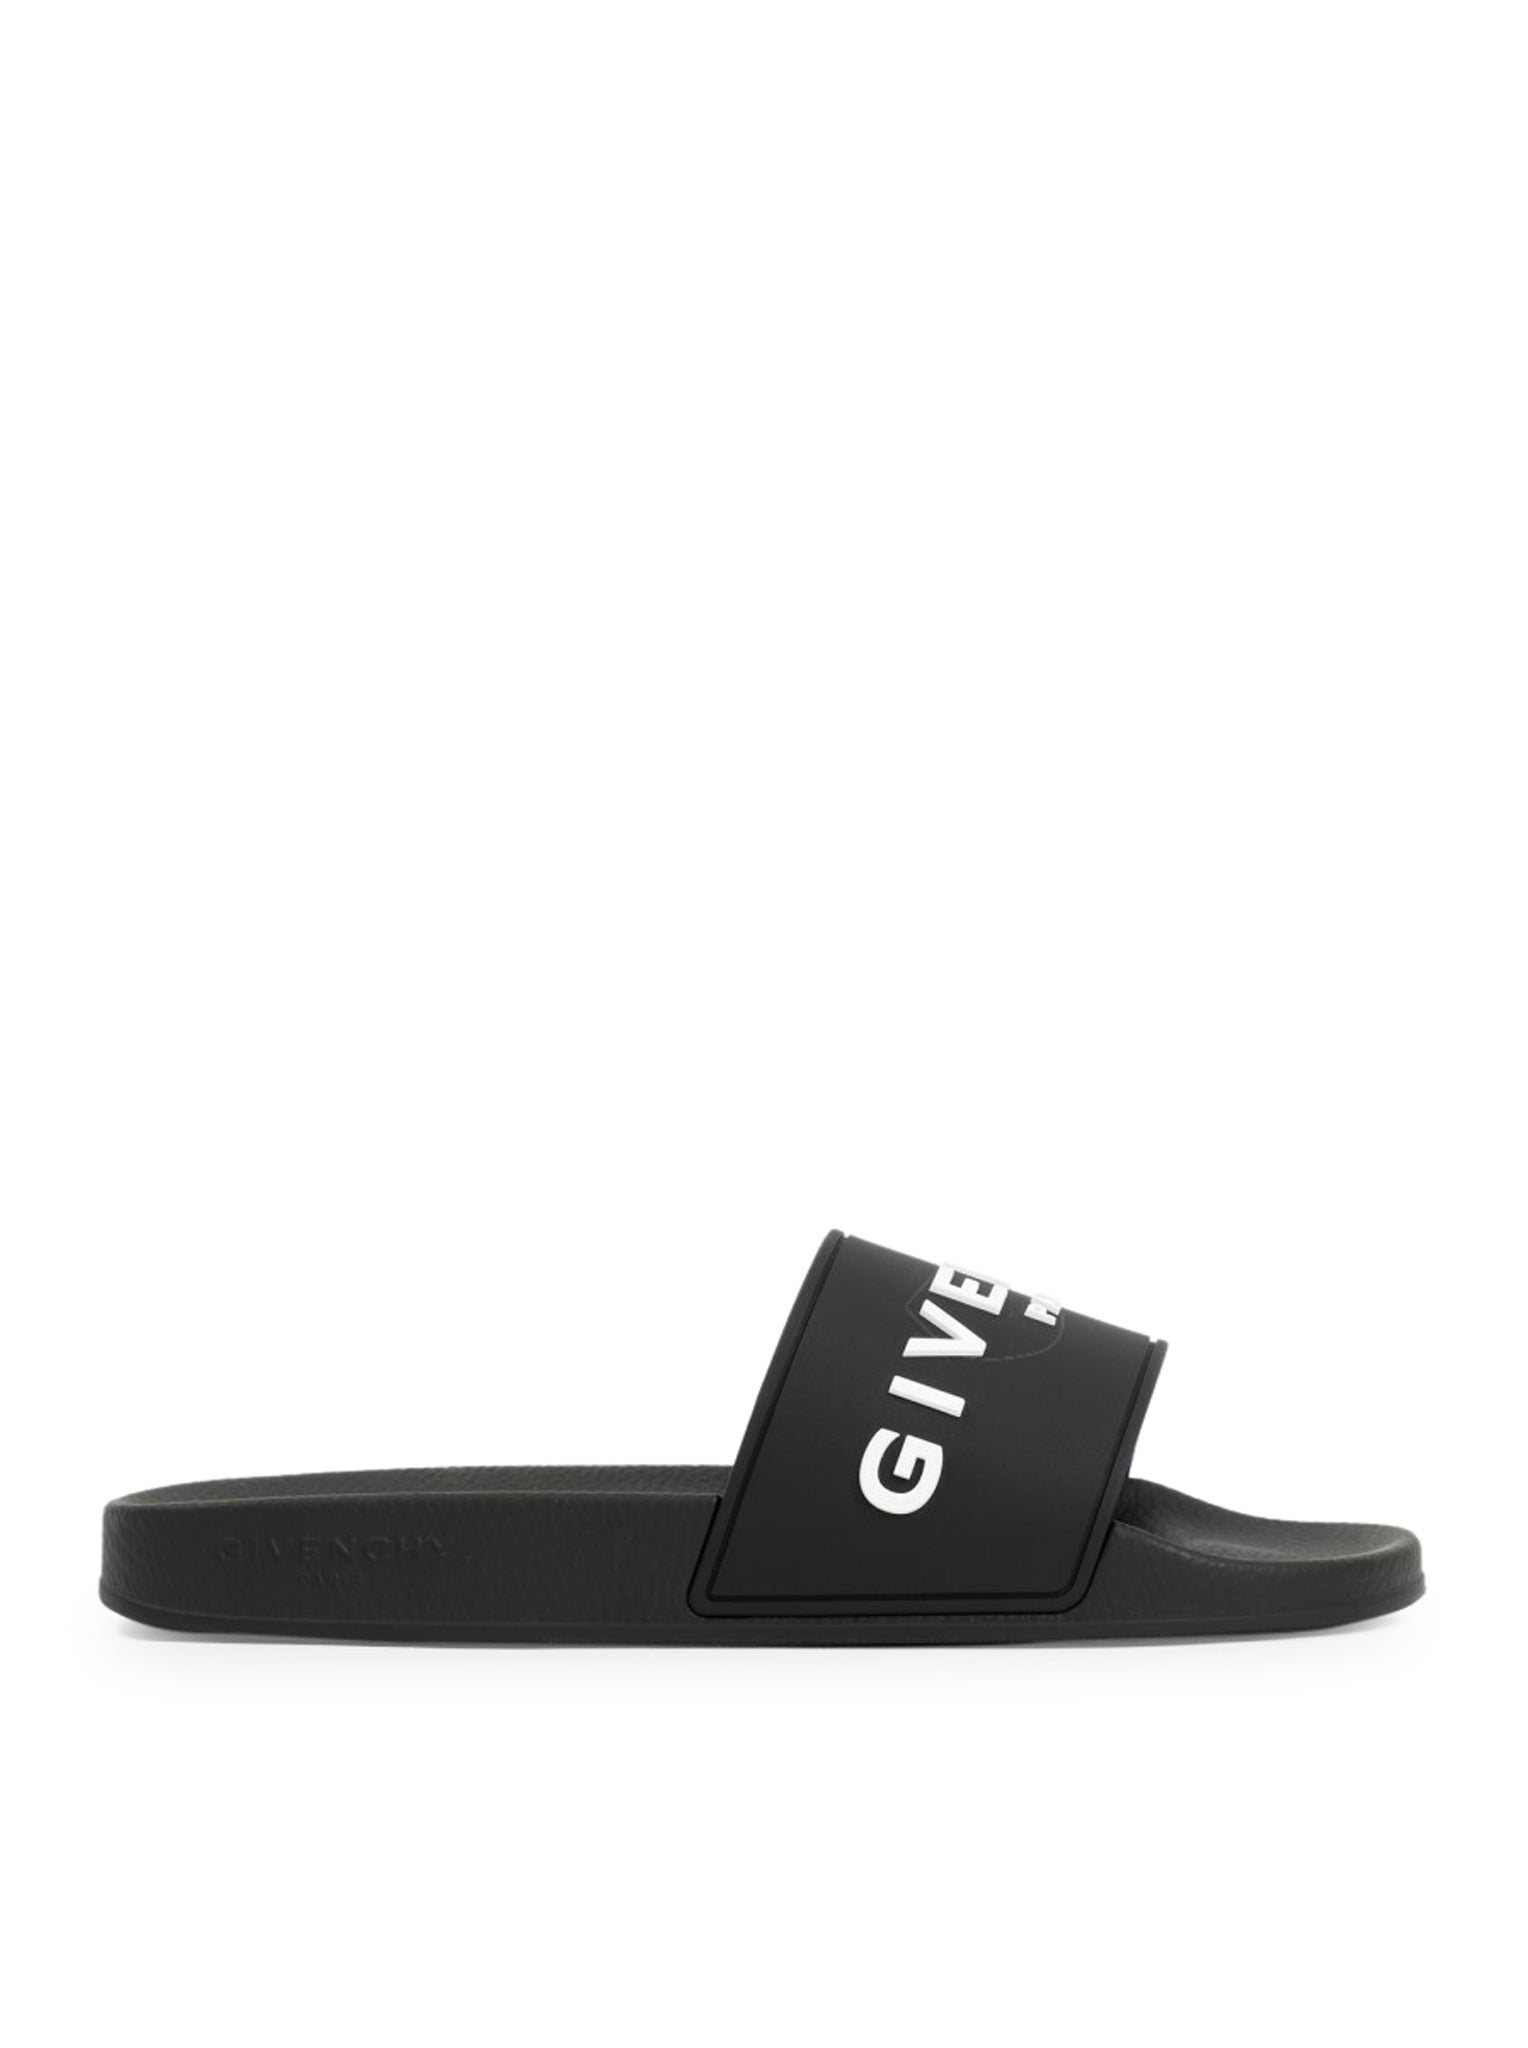 Ciabatte Givenchy in gomma nera con logo